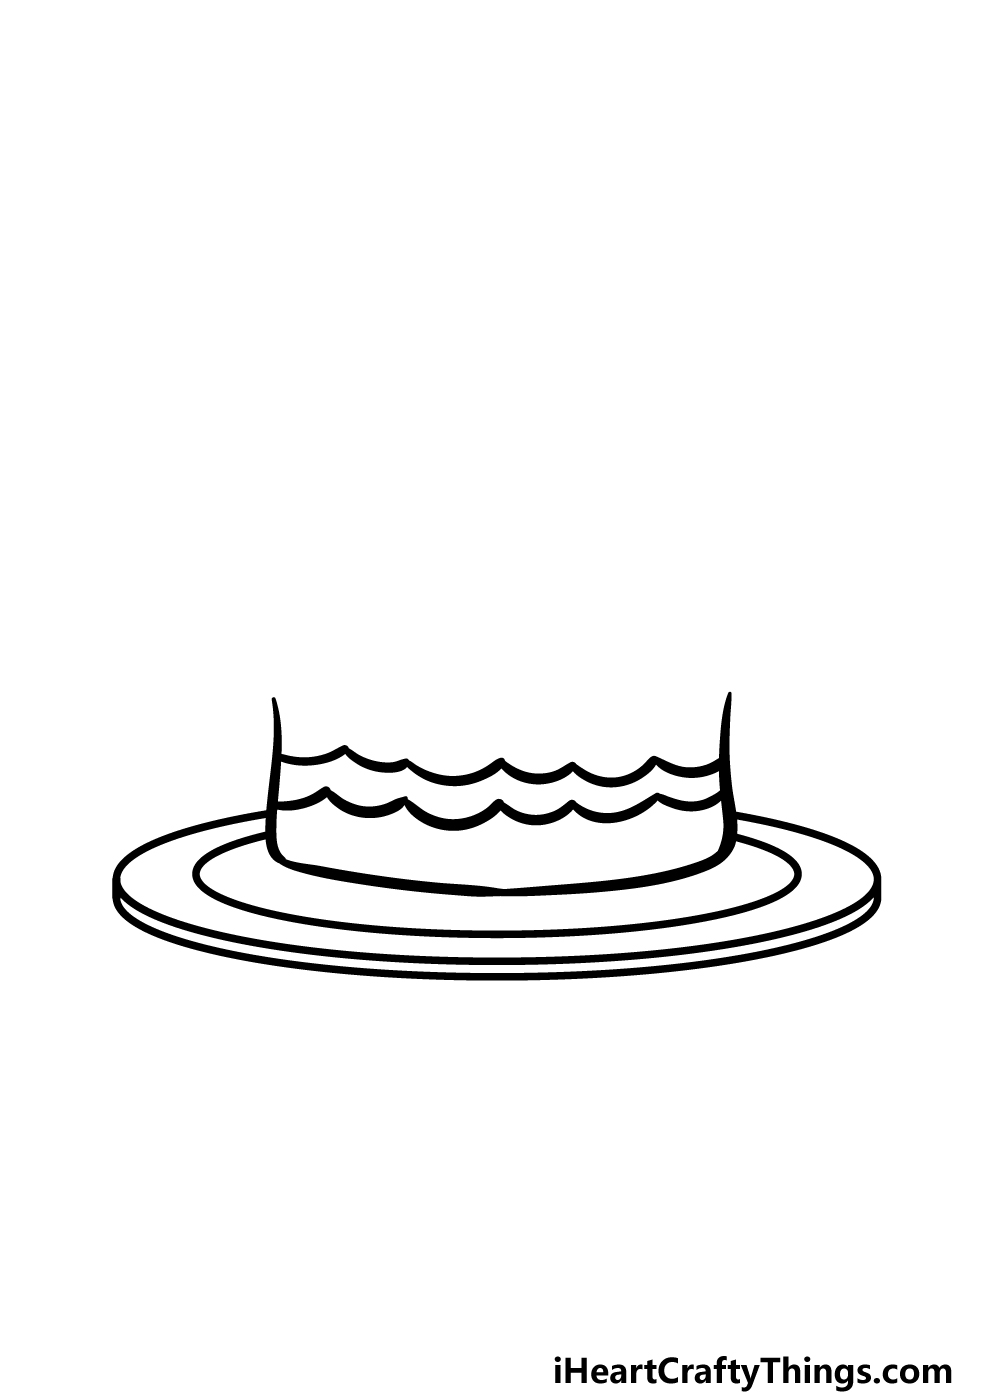 Cartoon Cake Drawing - How To Draw A Cartoon Cake Step By Step